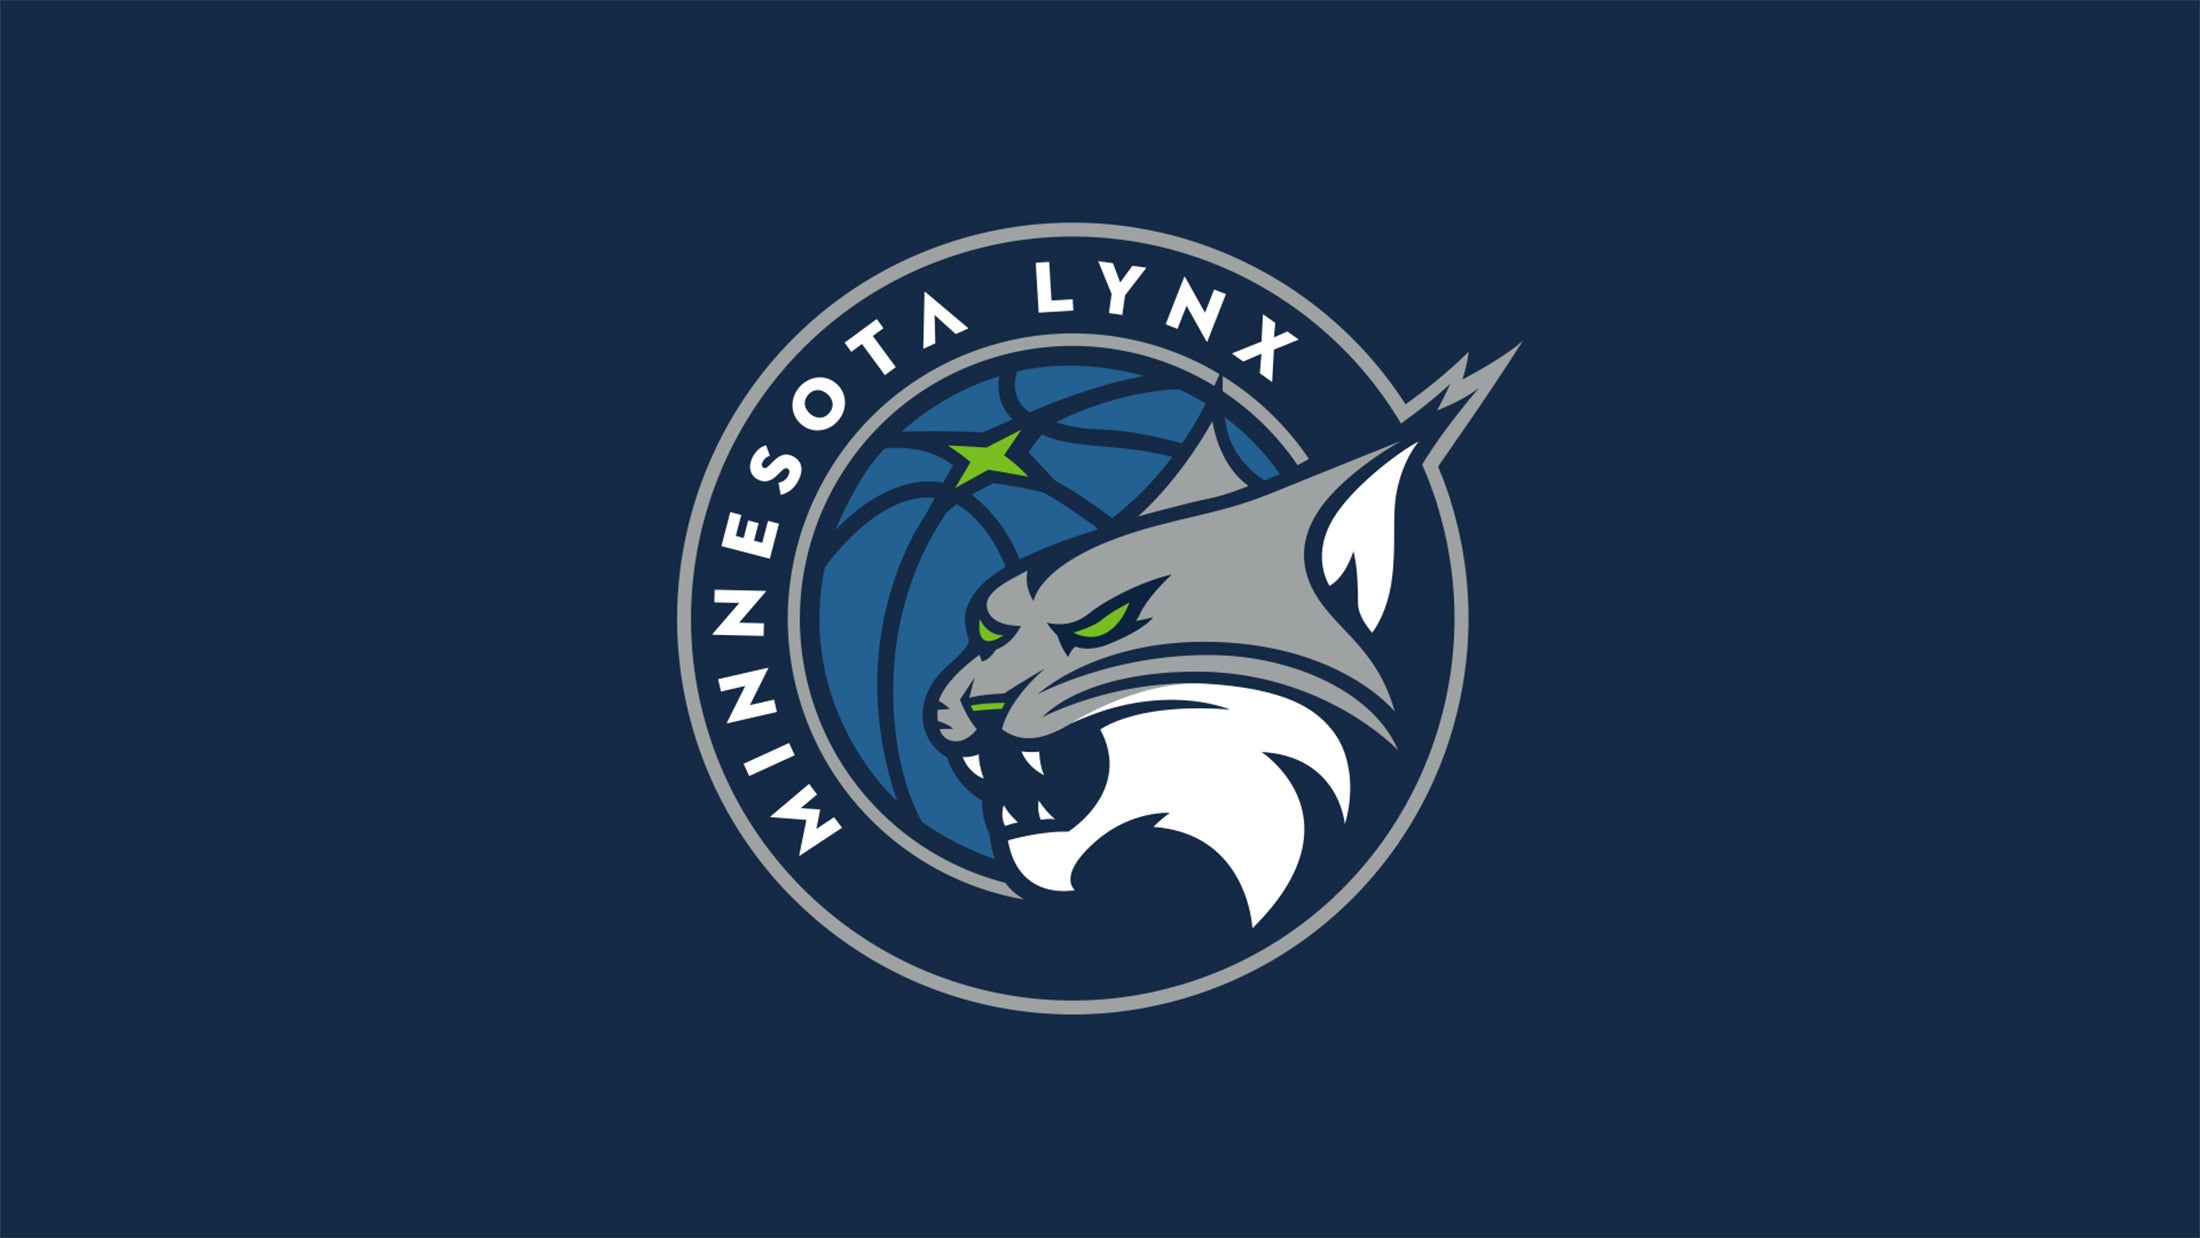 Minnesota Lynx vs. Las Vegas Aces at Target Center